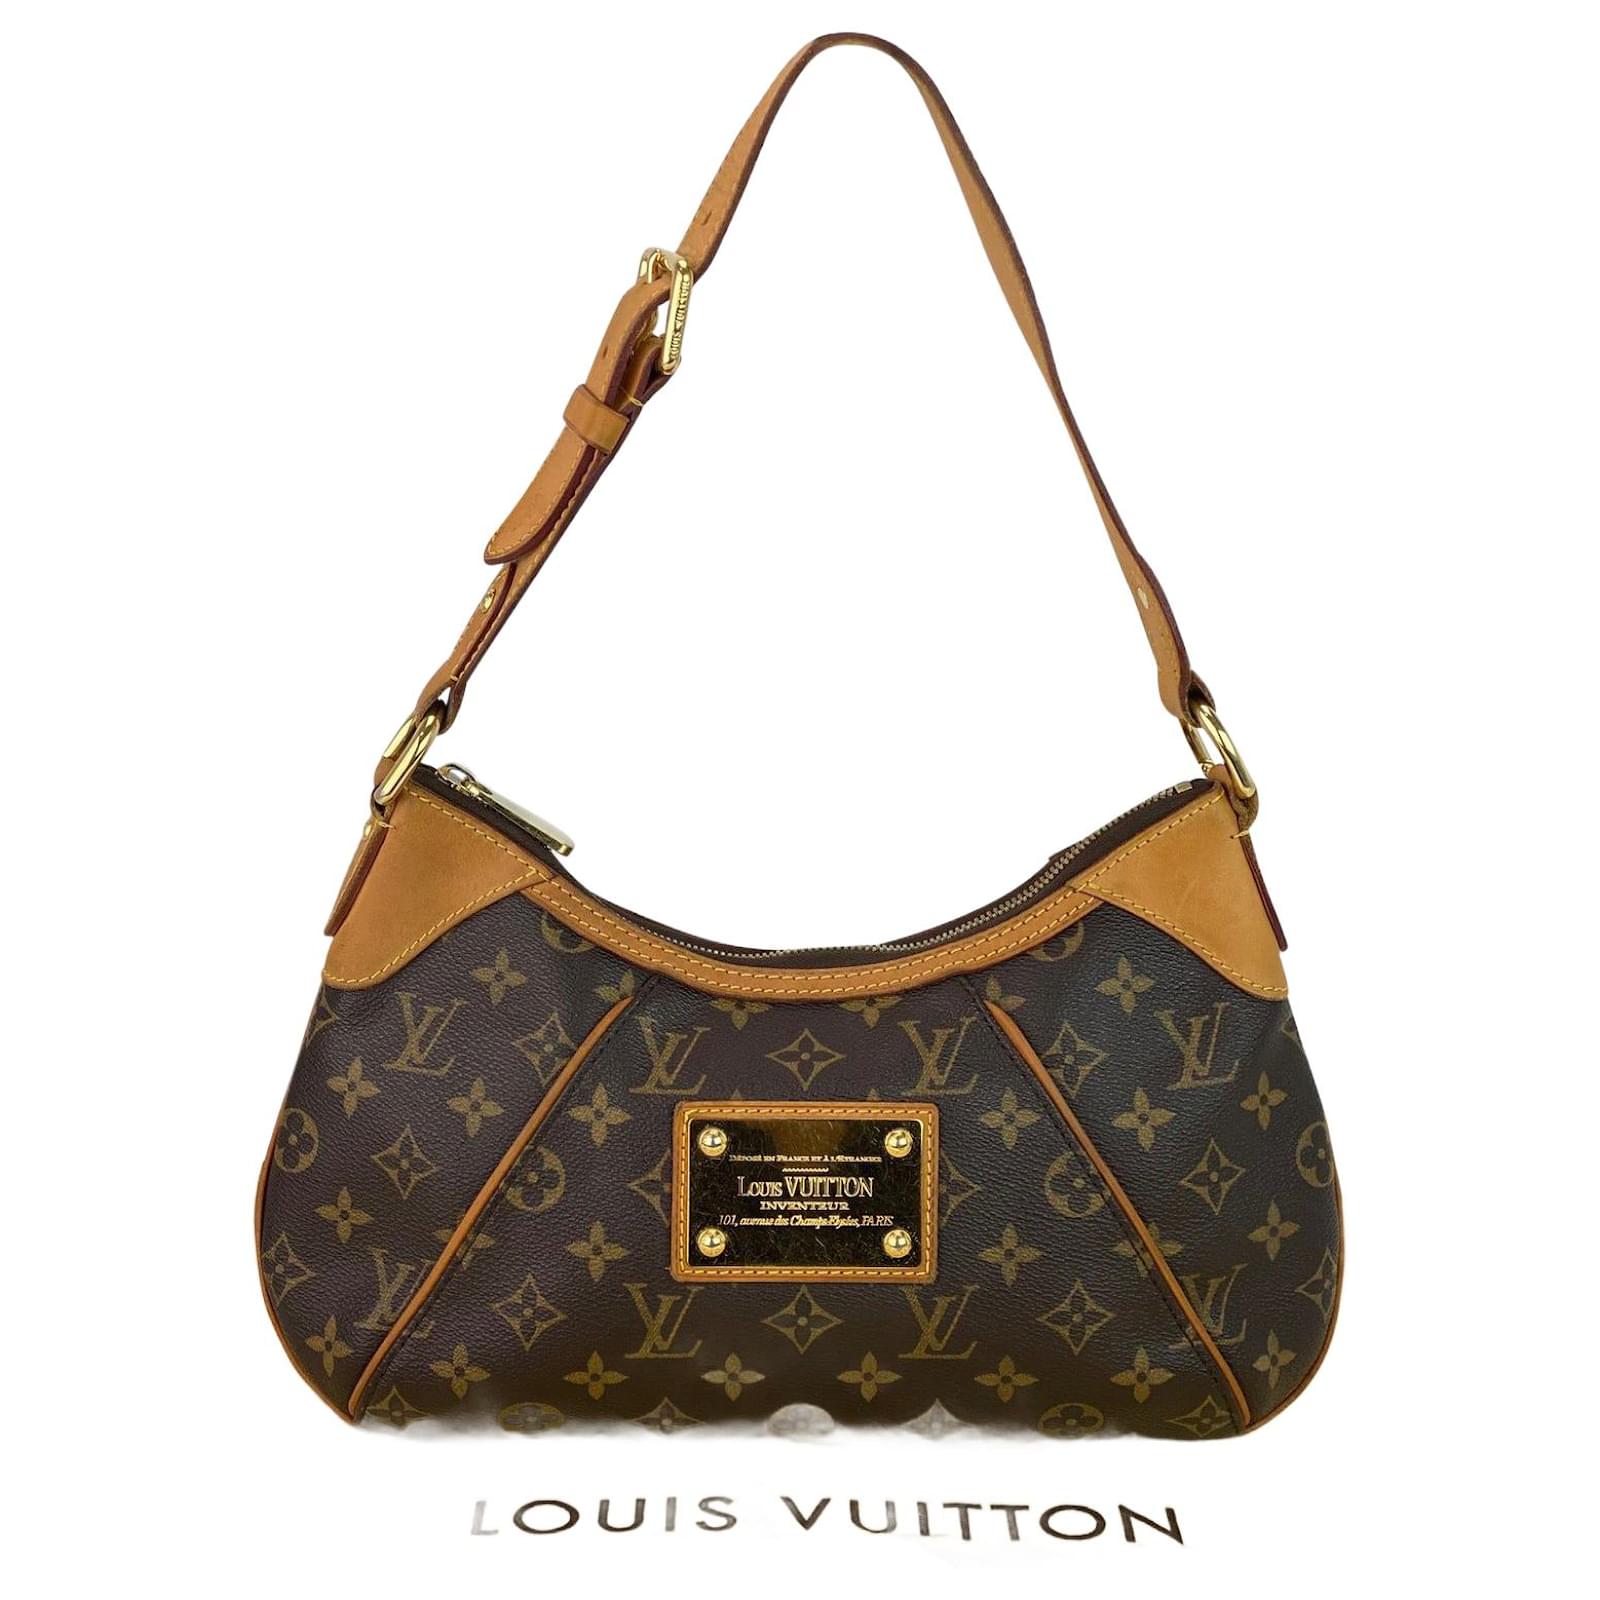 Louis Vuitton Thames PM Handbag in Monogram Canvas - Handbags